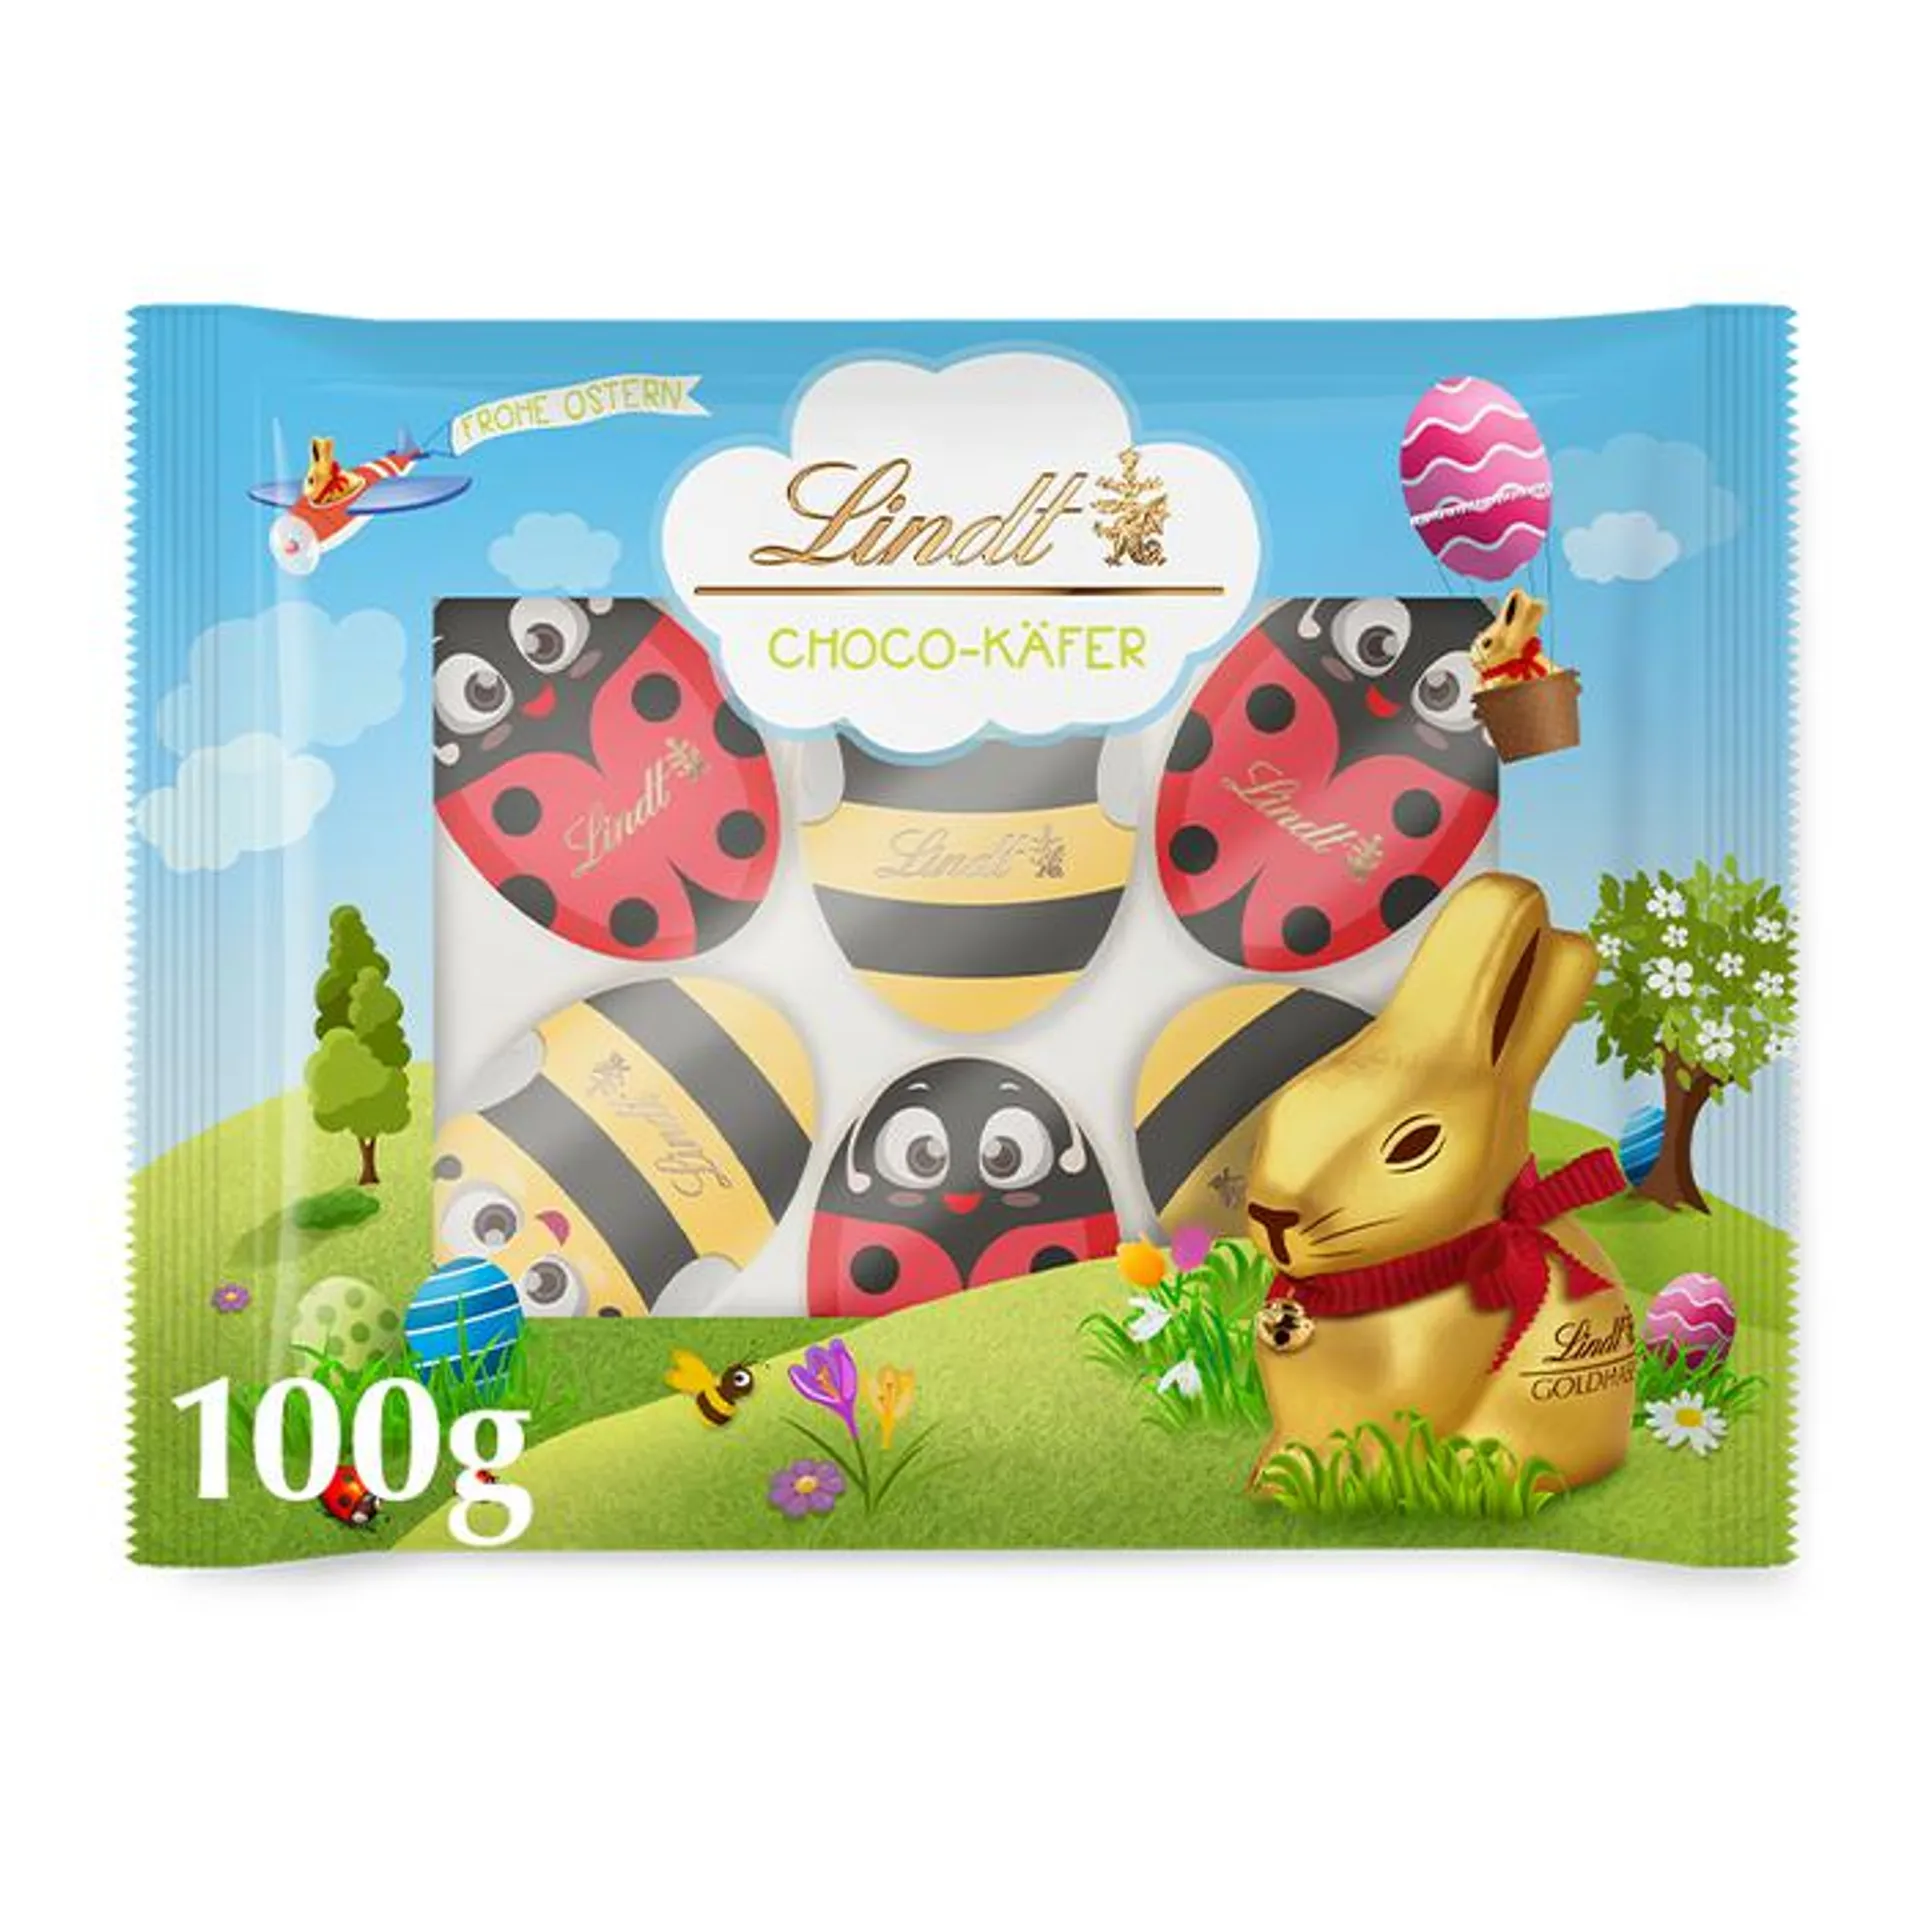 Figuritas BUGS & BEES de chocolate con leche 100g - Lindt